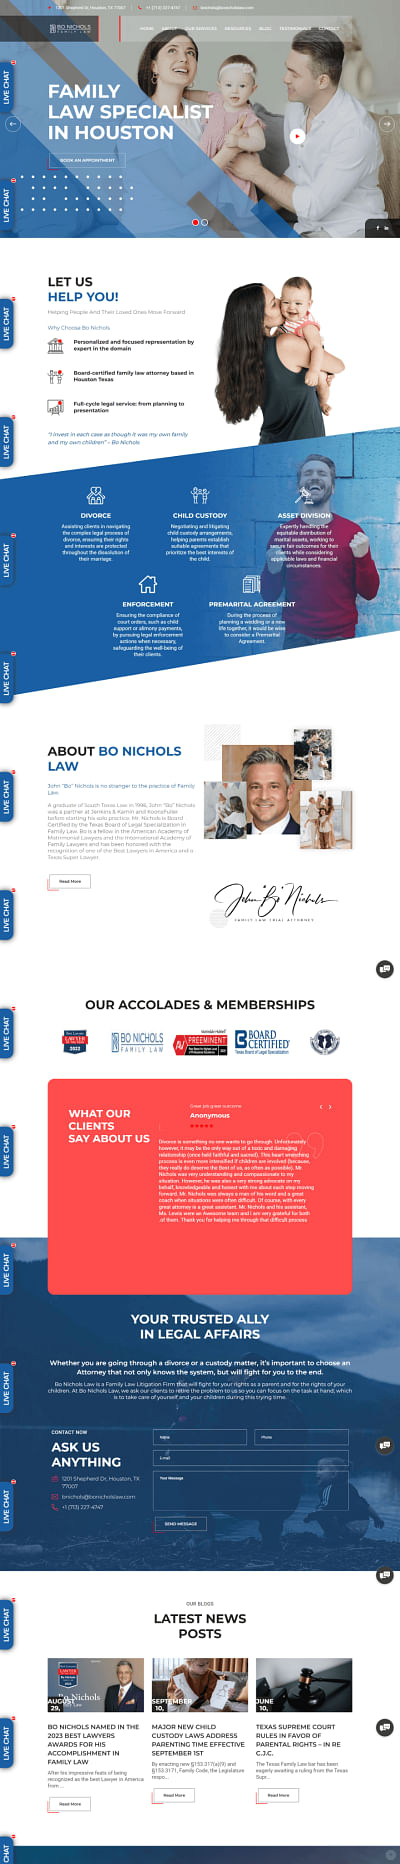 Bo Nicholas Law Firm - Webseitengestaltung